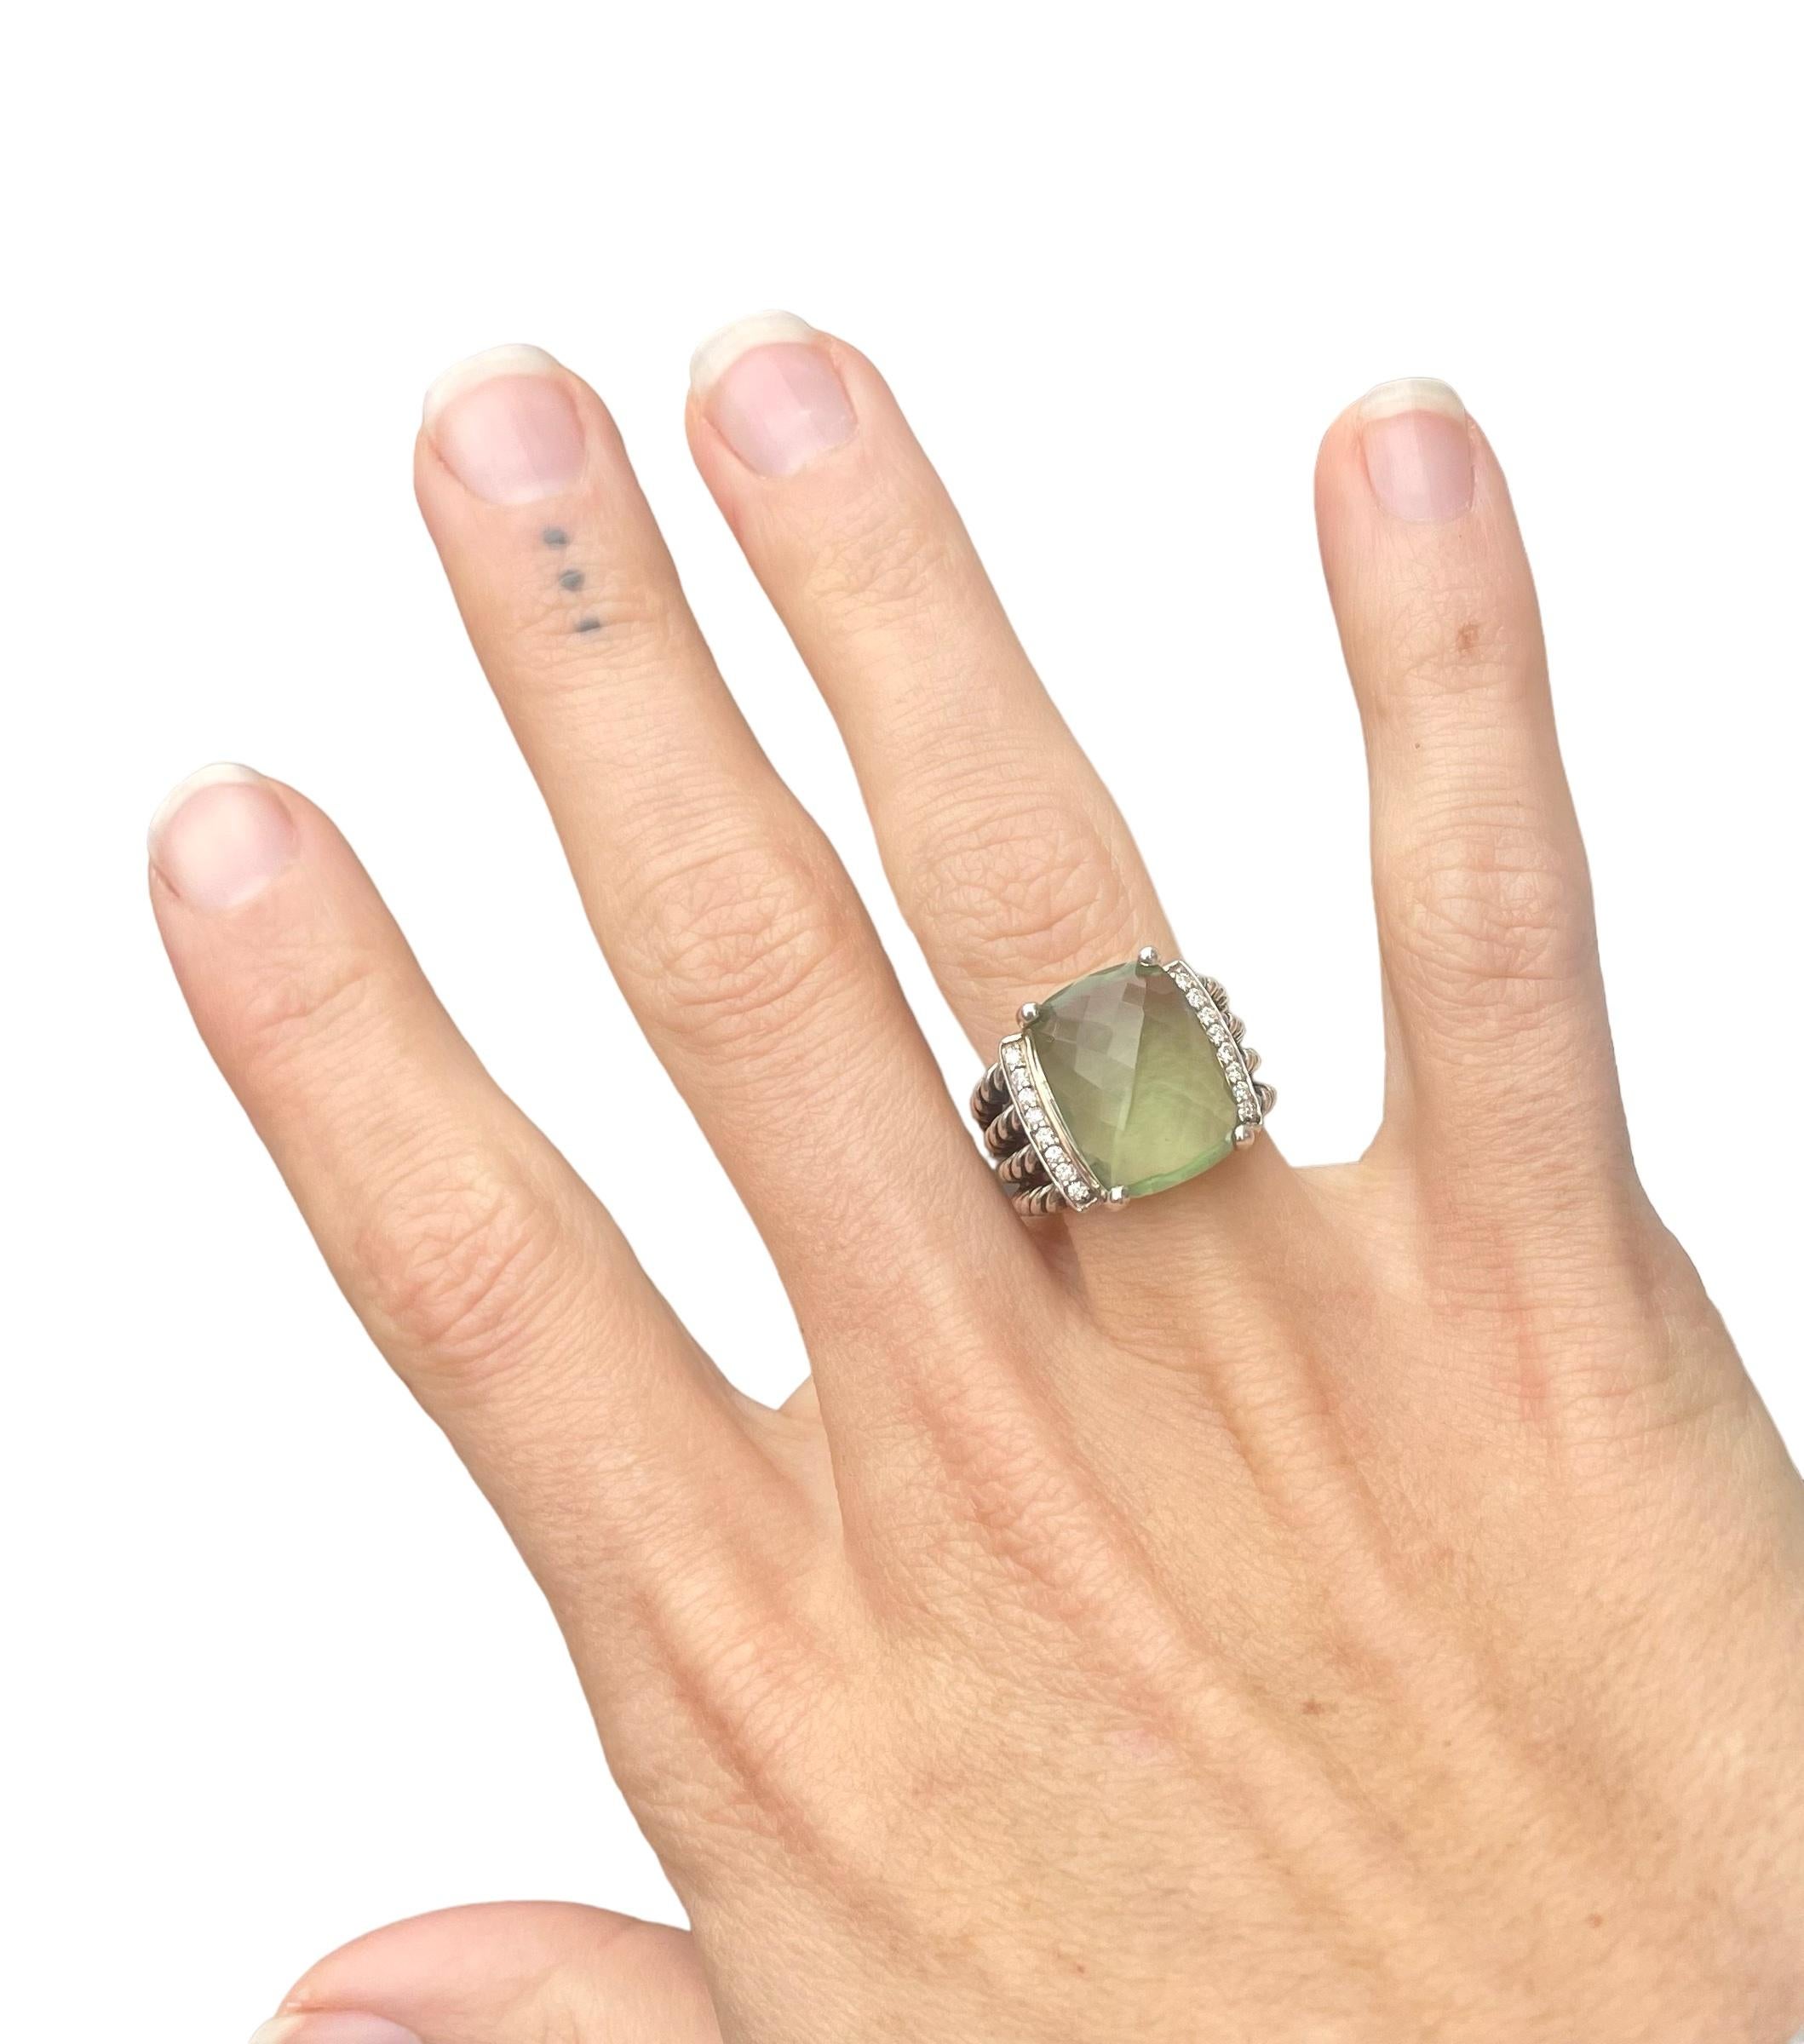 David Yurman Wheaton Ring with Prasiolite and Diamonds

A beautiful David Yurman ring with the signature cable motif strands, Pave diamonds and a beautiful prasiolite stone (a rare green quartz) 